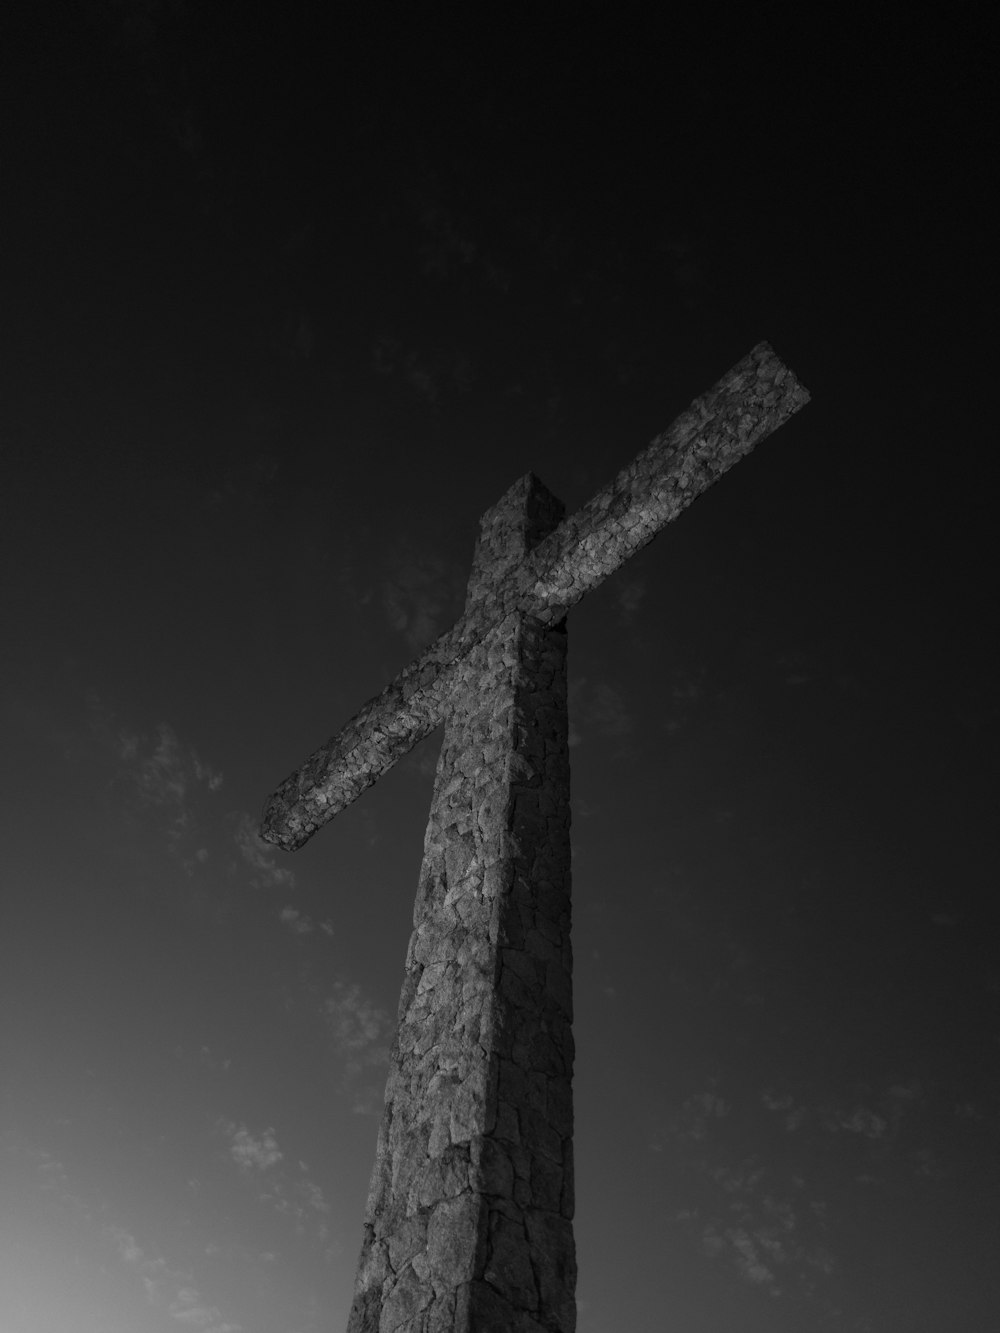 a cross on a tree